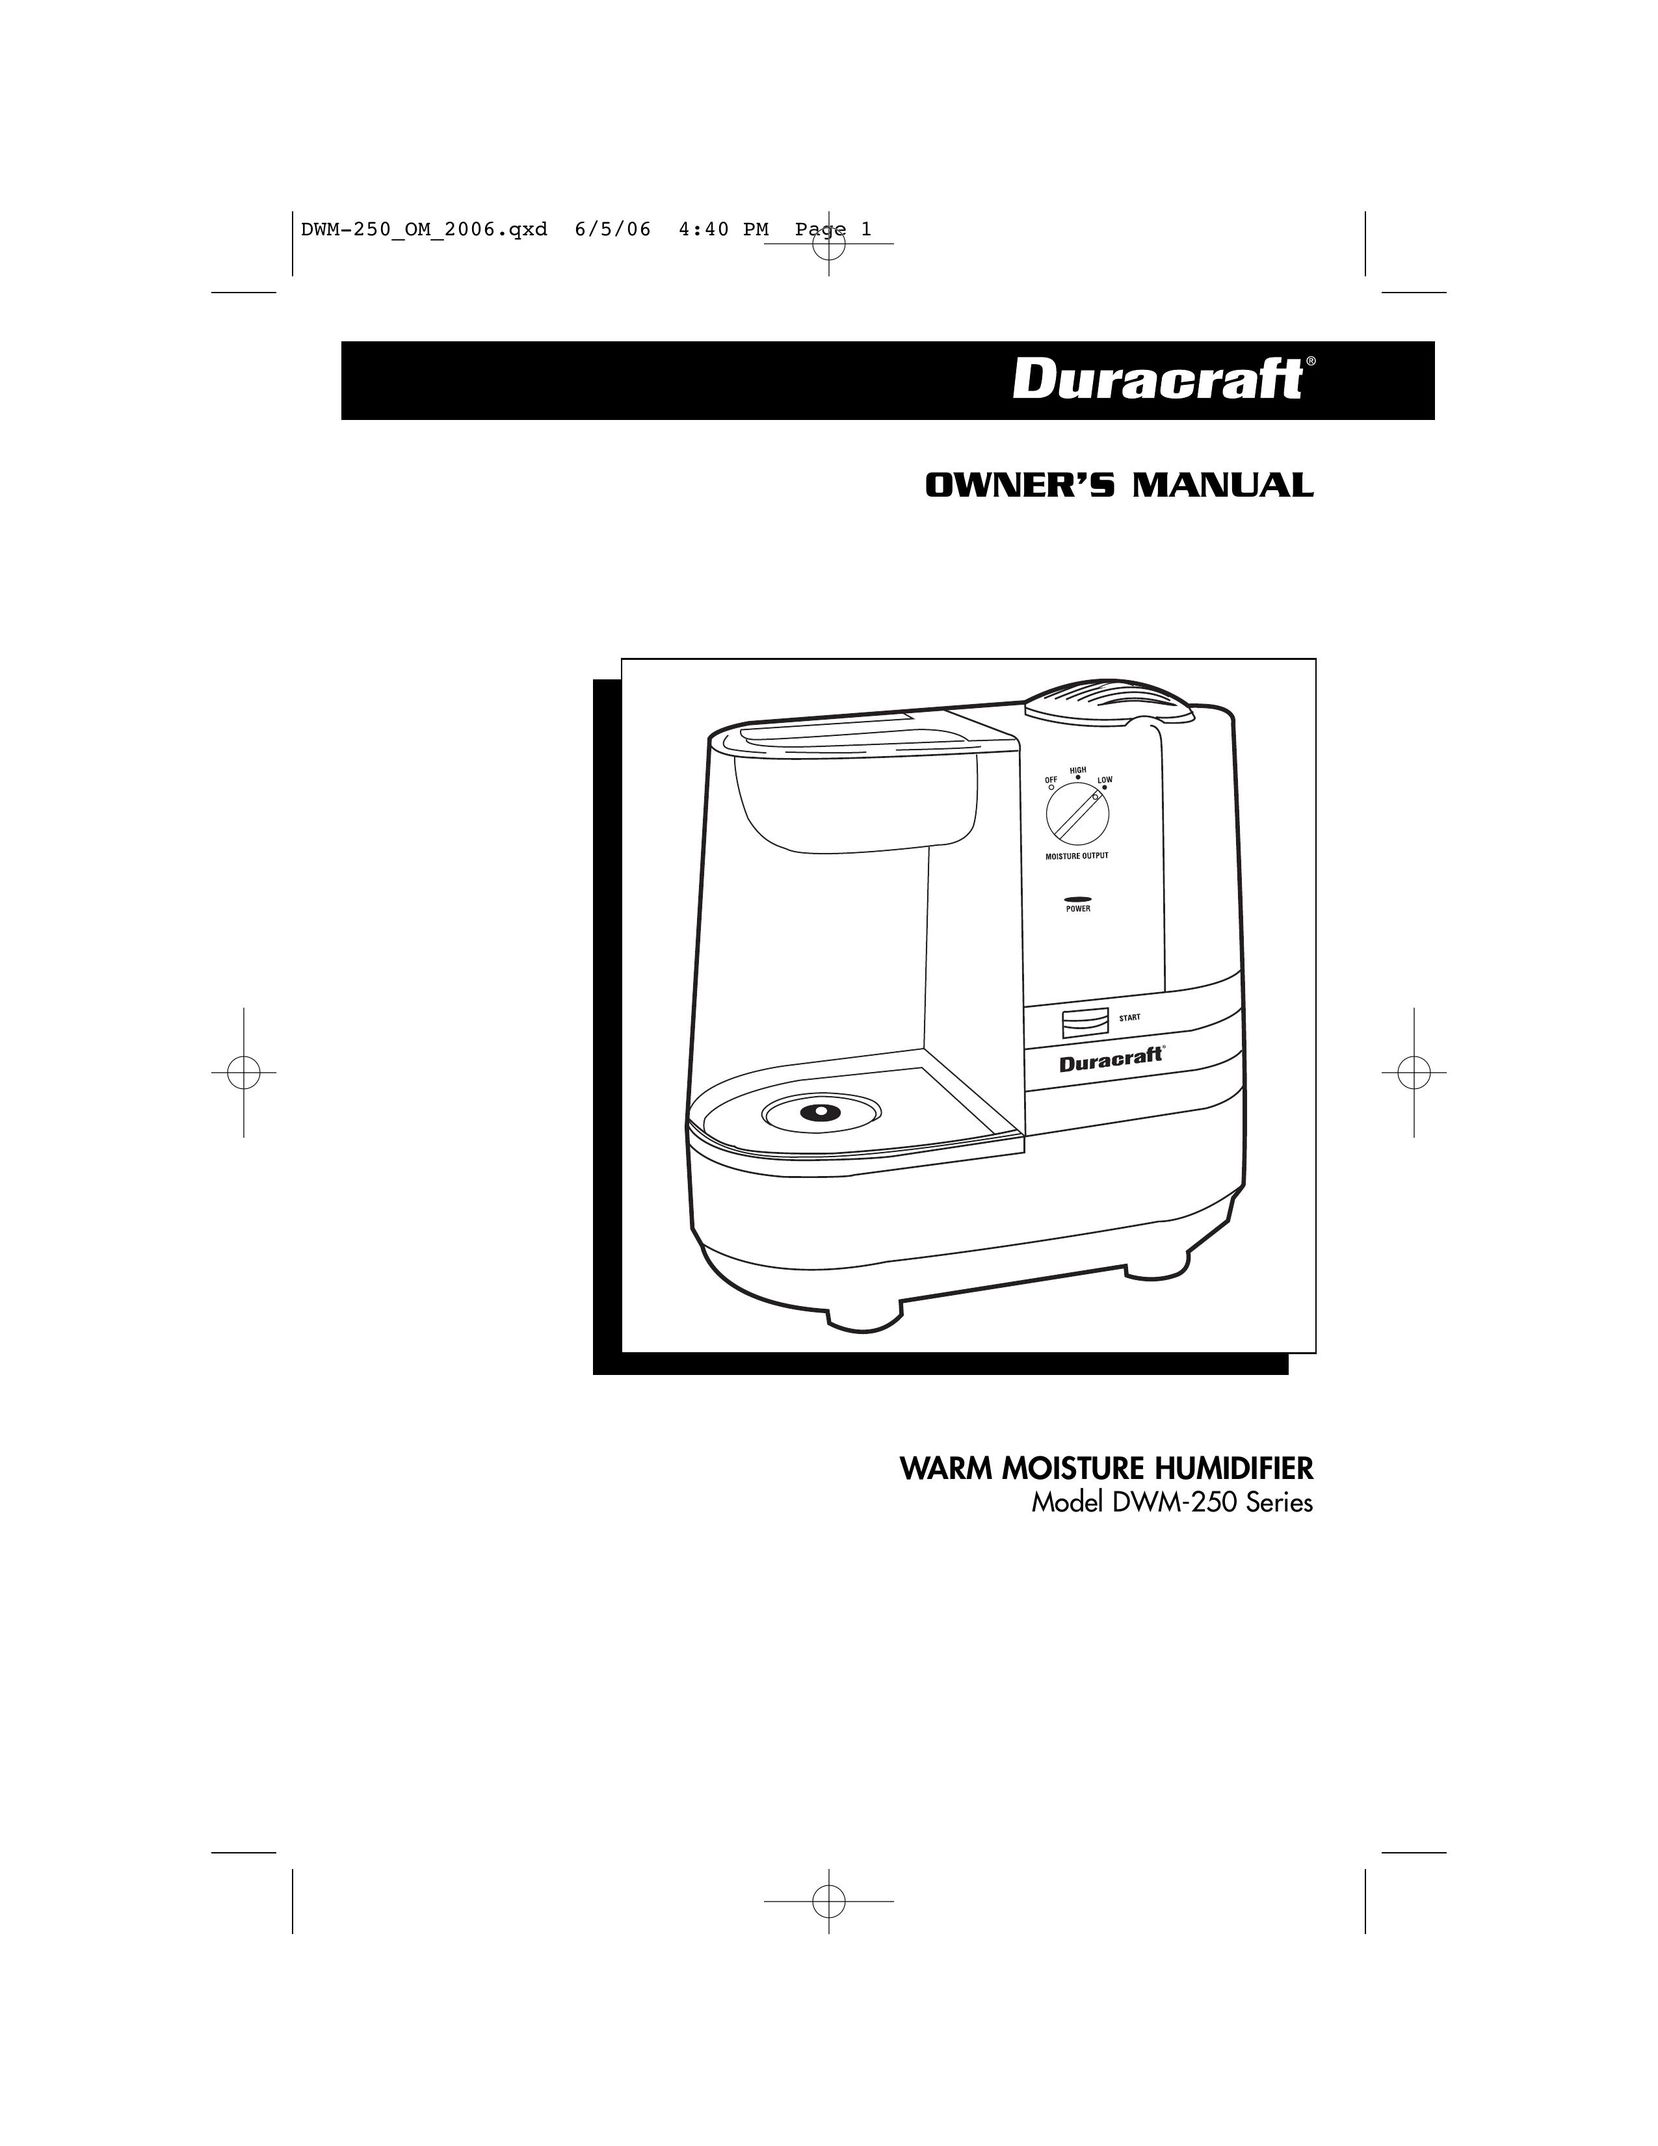 Duracraft DWM-250 Humidifier User Manual